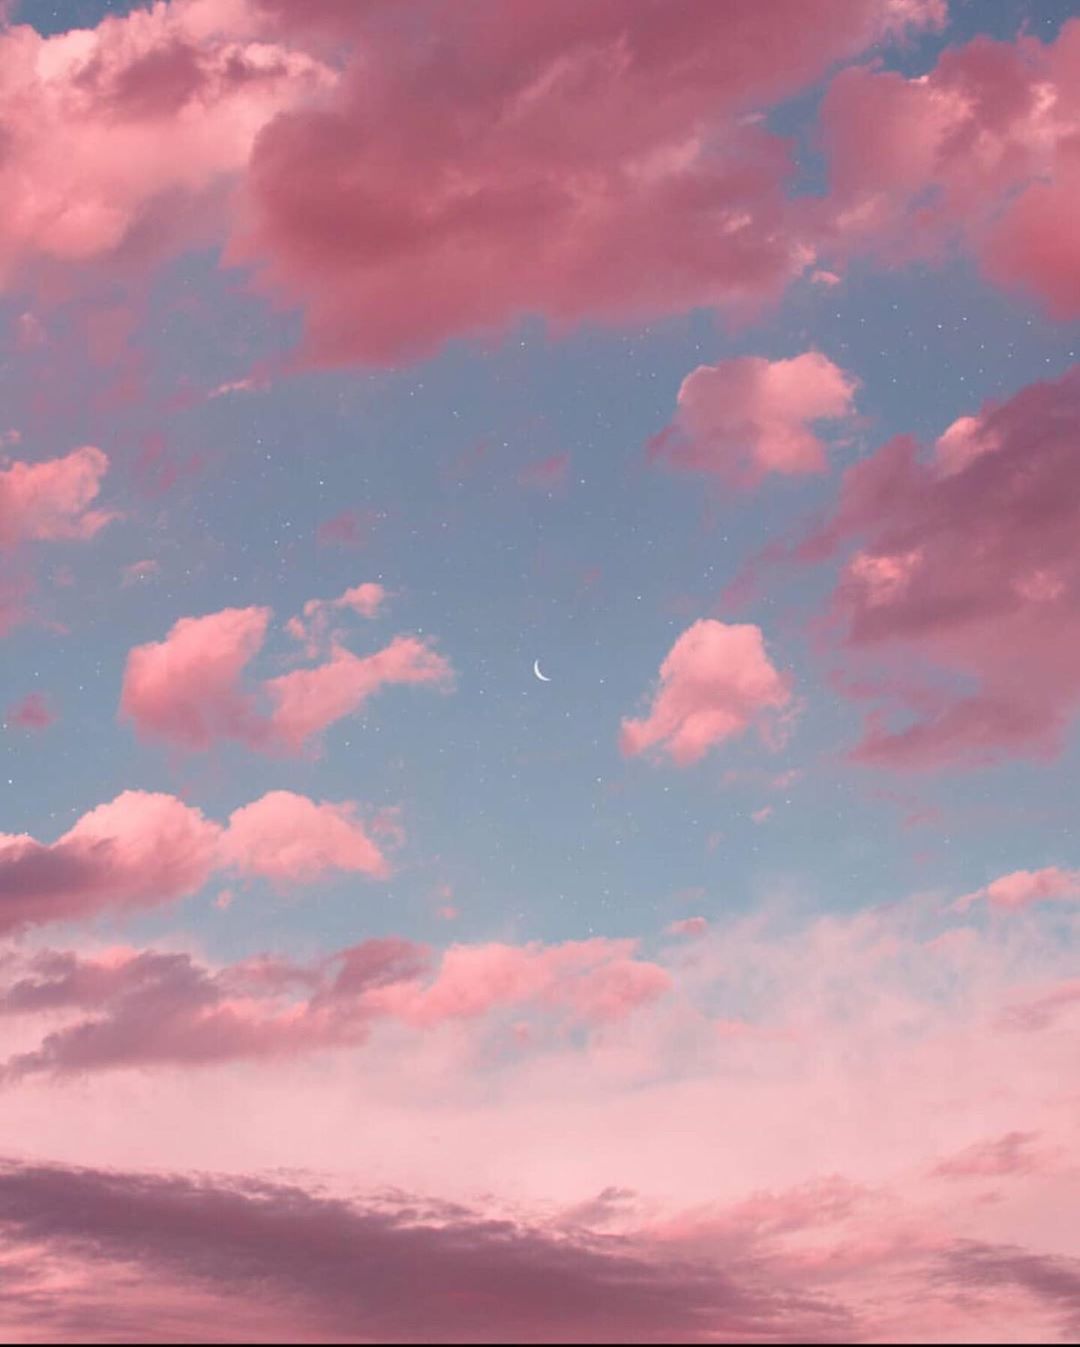 icy_gemz on Instagram: “Cotton Candy skies